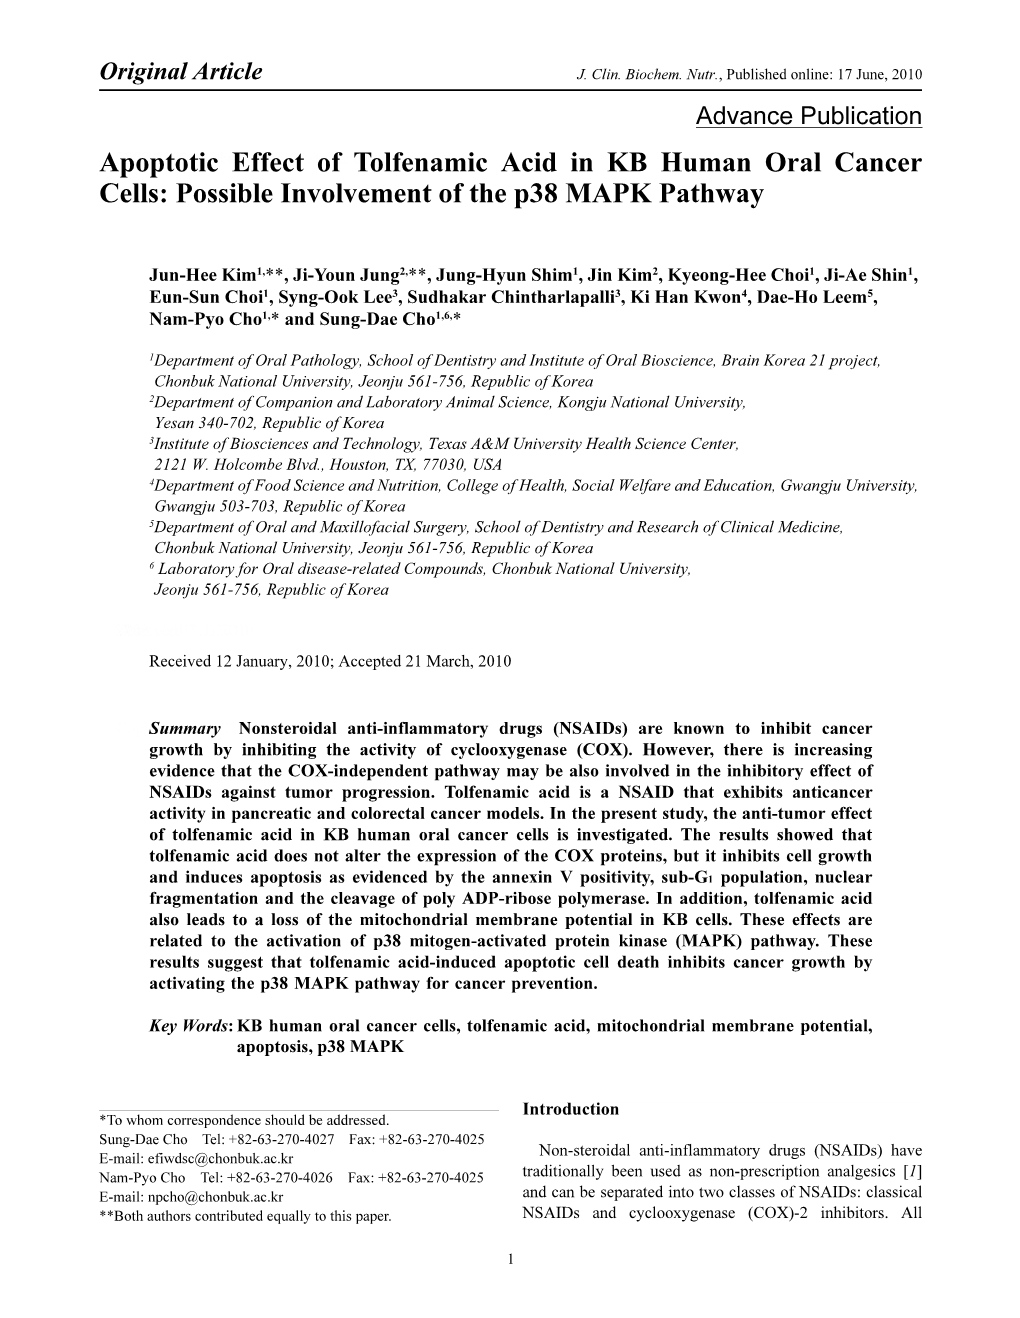 Apoptotic Effect of Tolfenamic Acid in KB Human Oral Cancer Cells